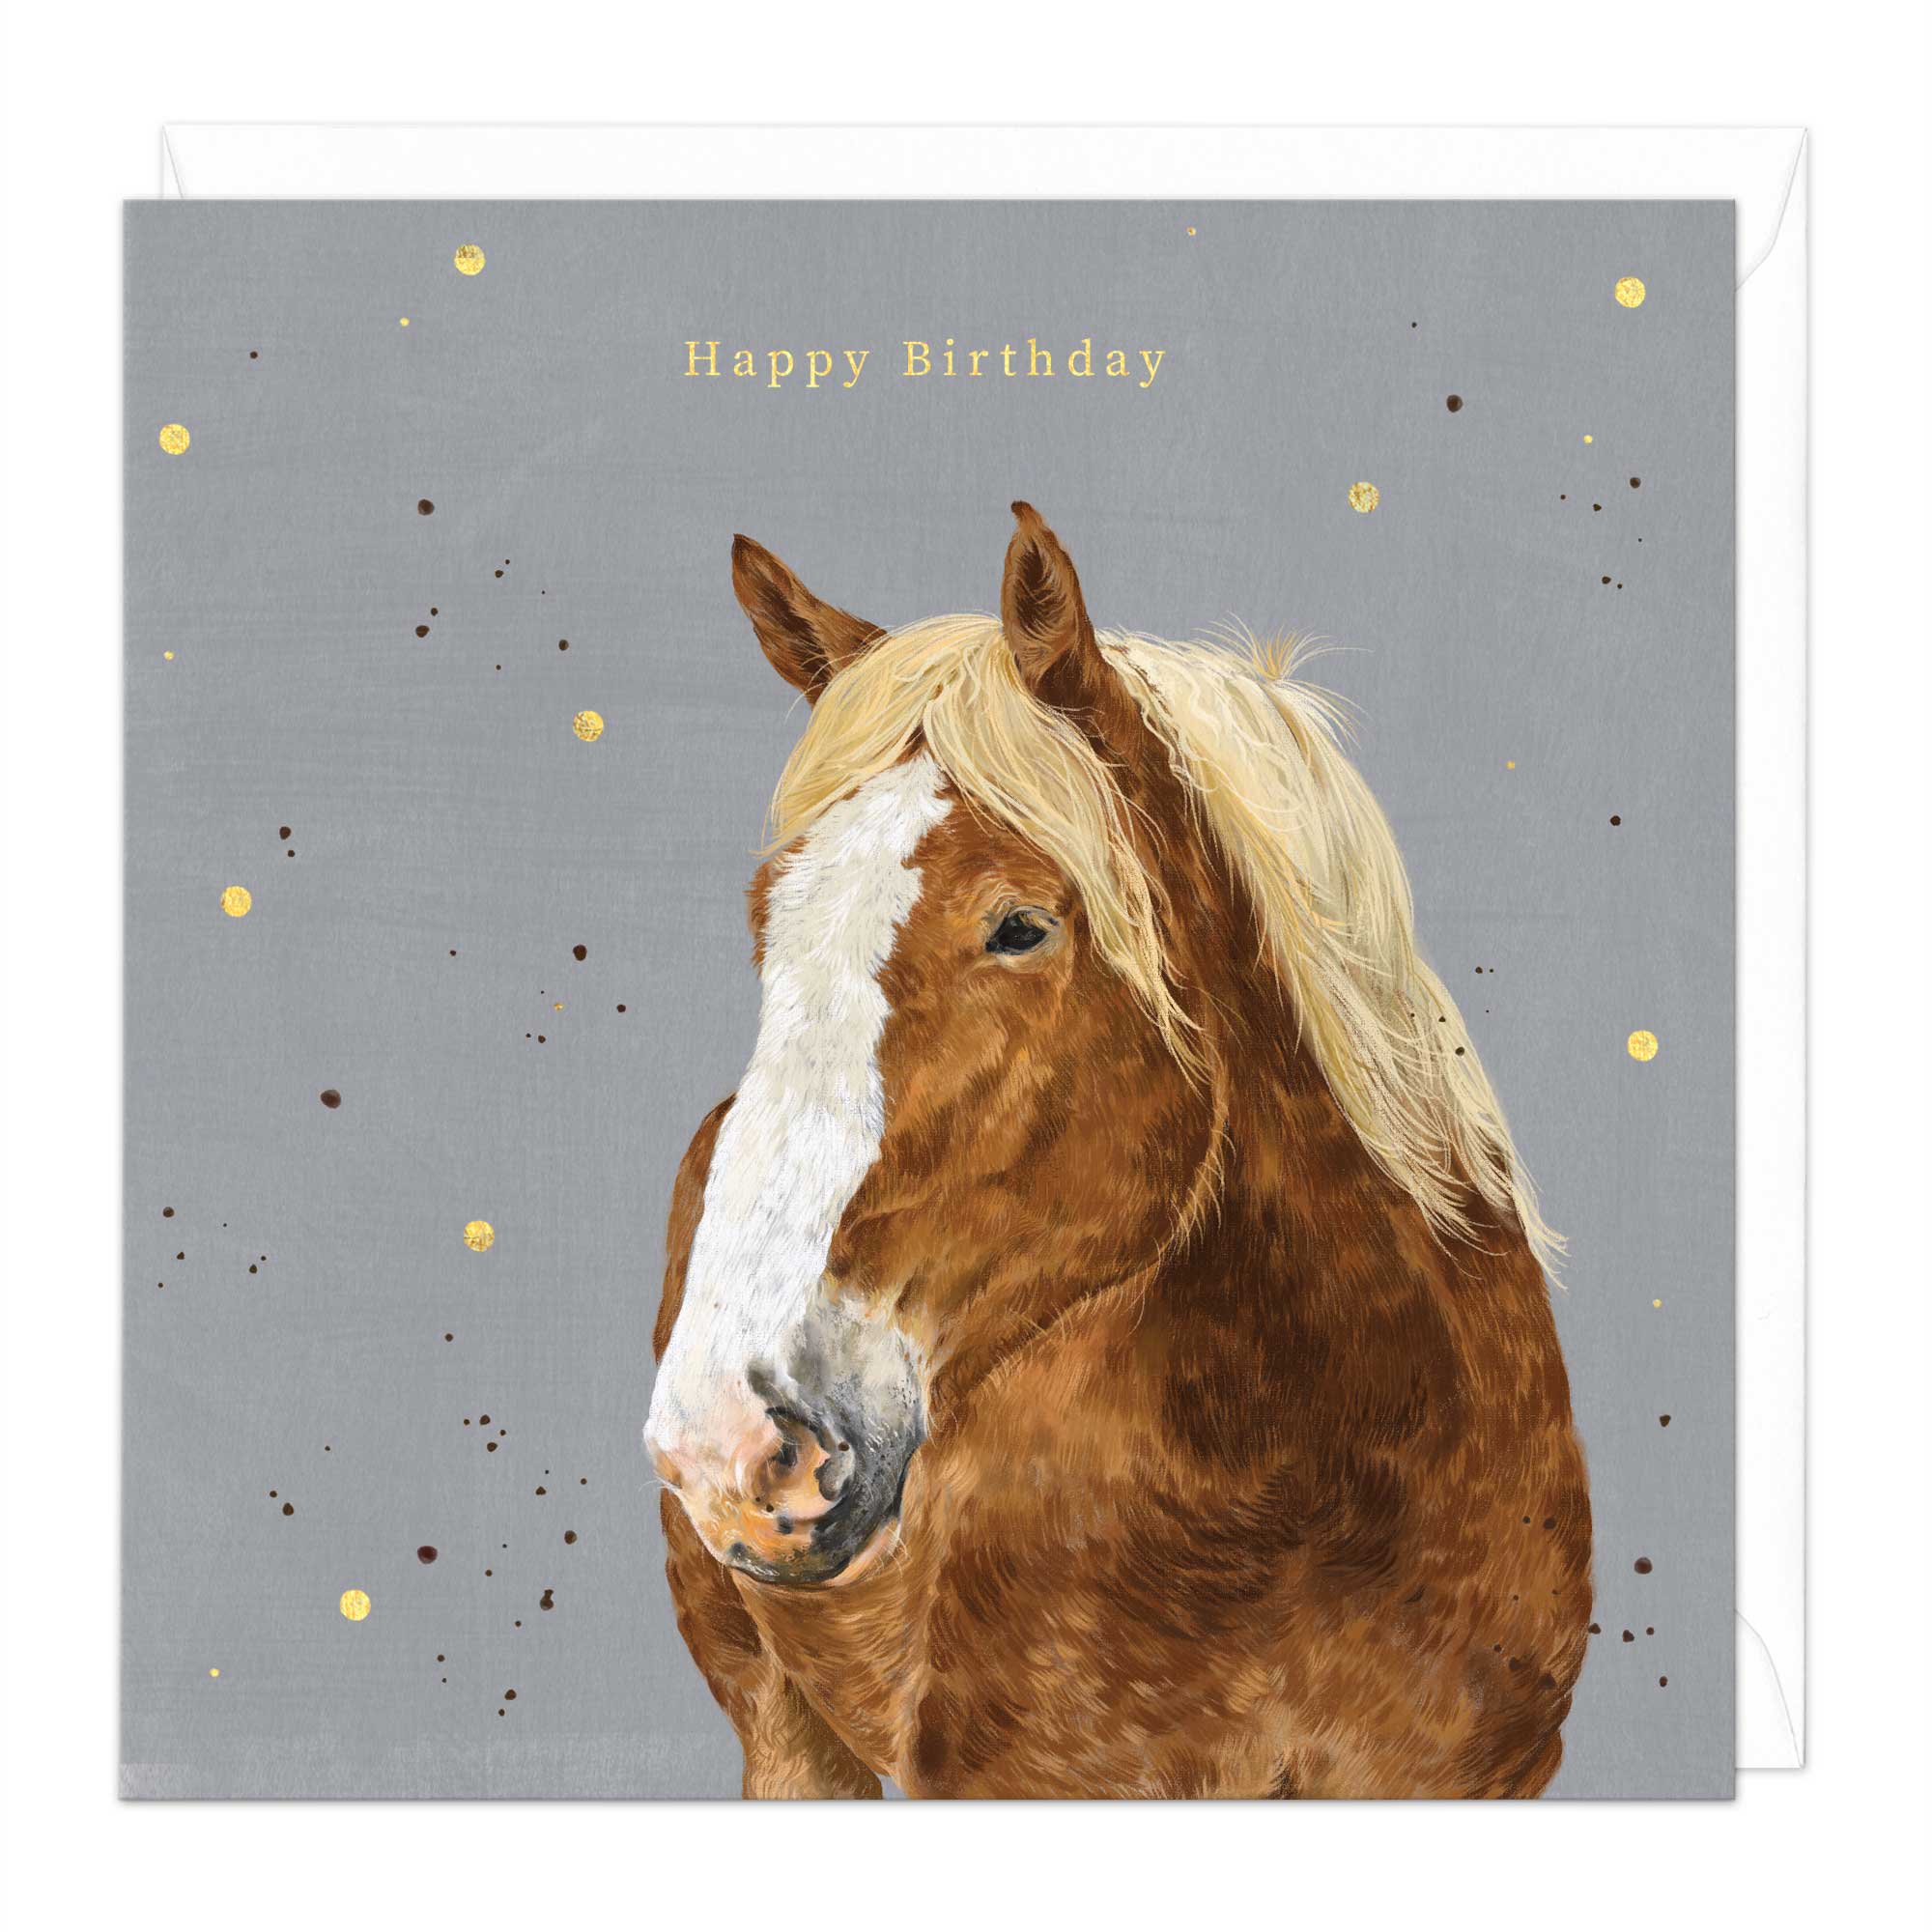 Chestnut Horse Birthday Card